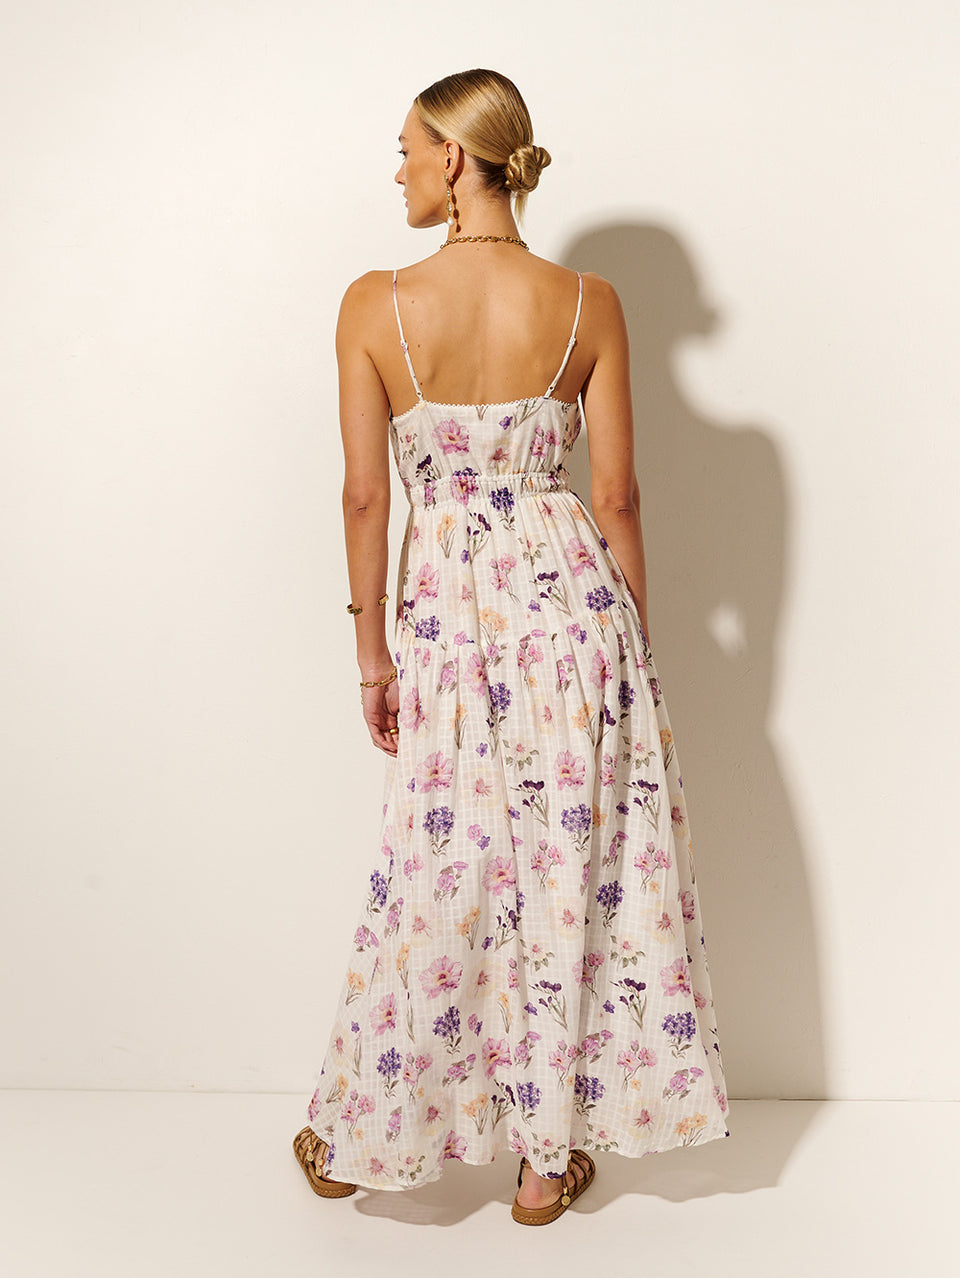 Phoebe Maxi Dress KIVARI | Model wears ivory and purple floral maxi dress back view